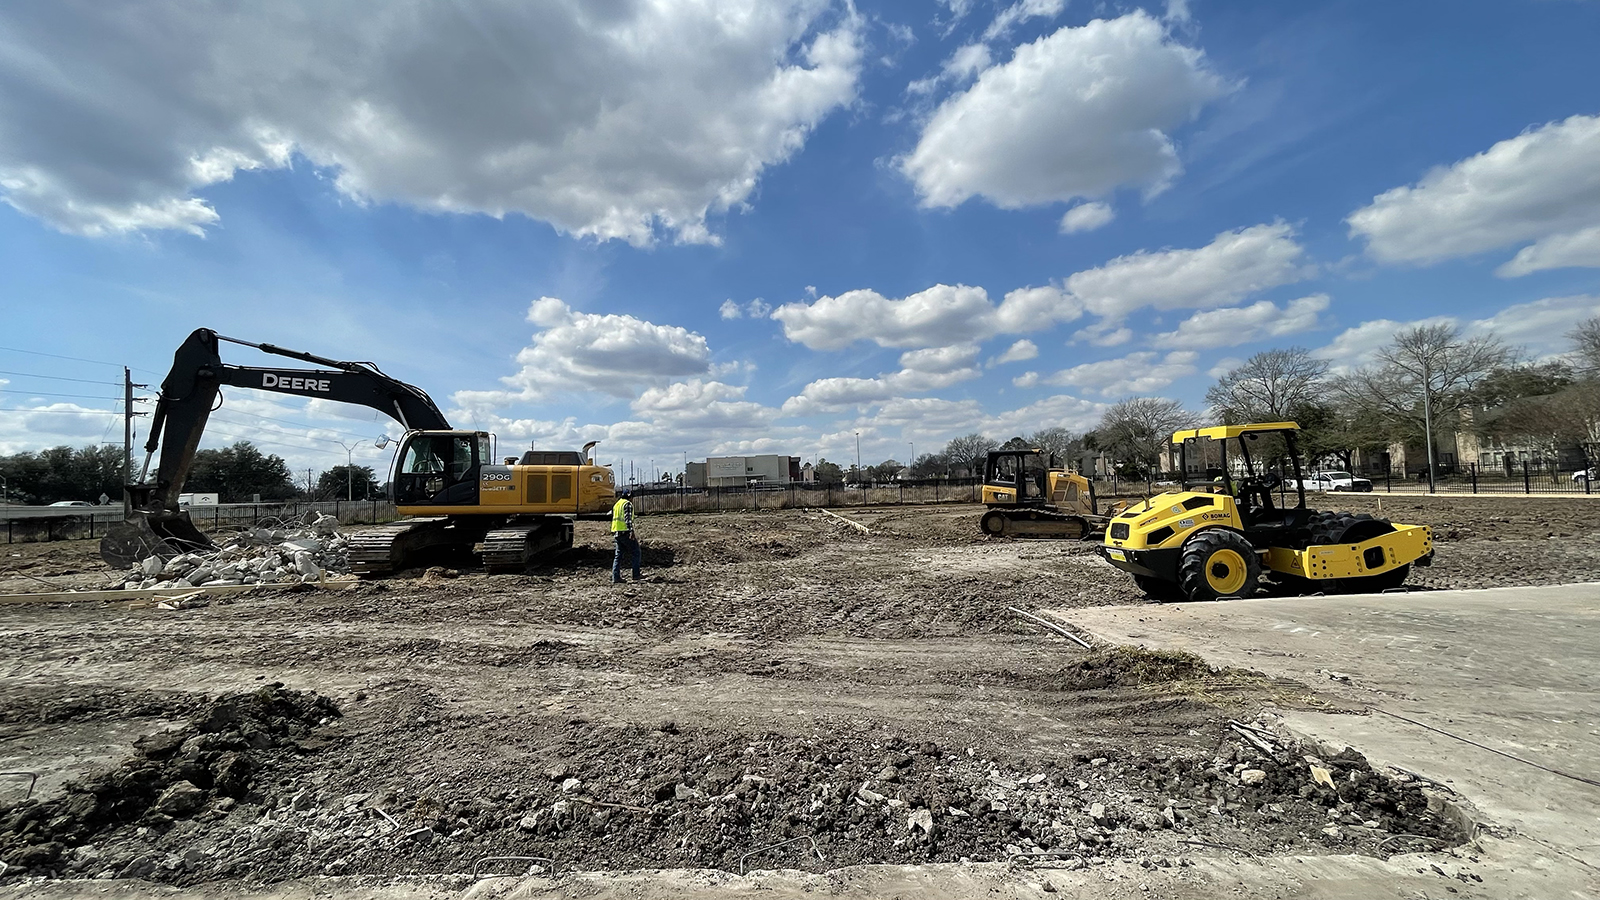 Construction underway at Centro Islámico near Houston, Texas, on March 3, 2022. Photo courtesy of Jaime “Mujahid” Fletcher